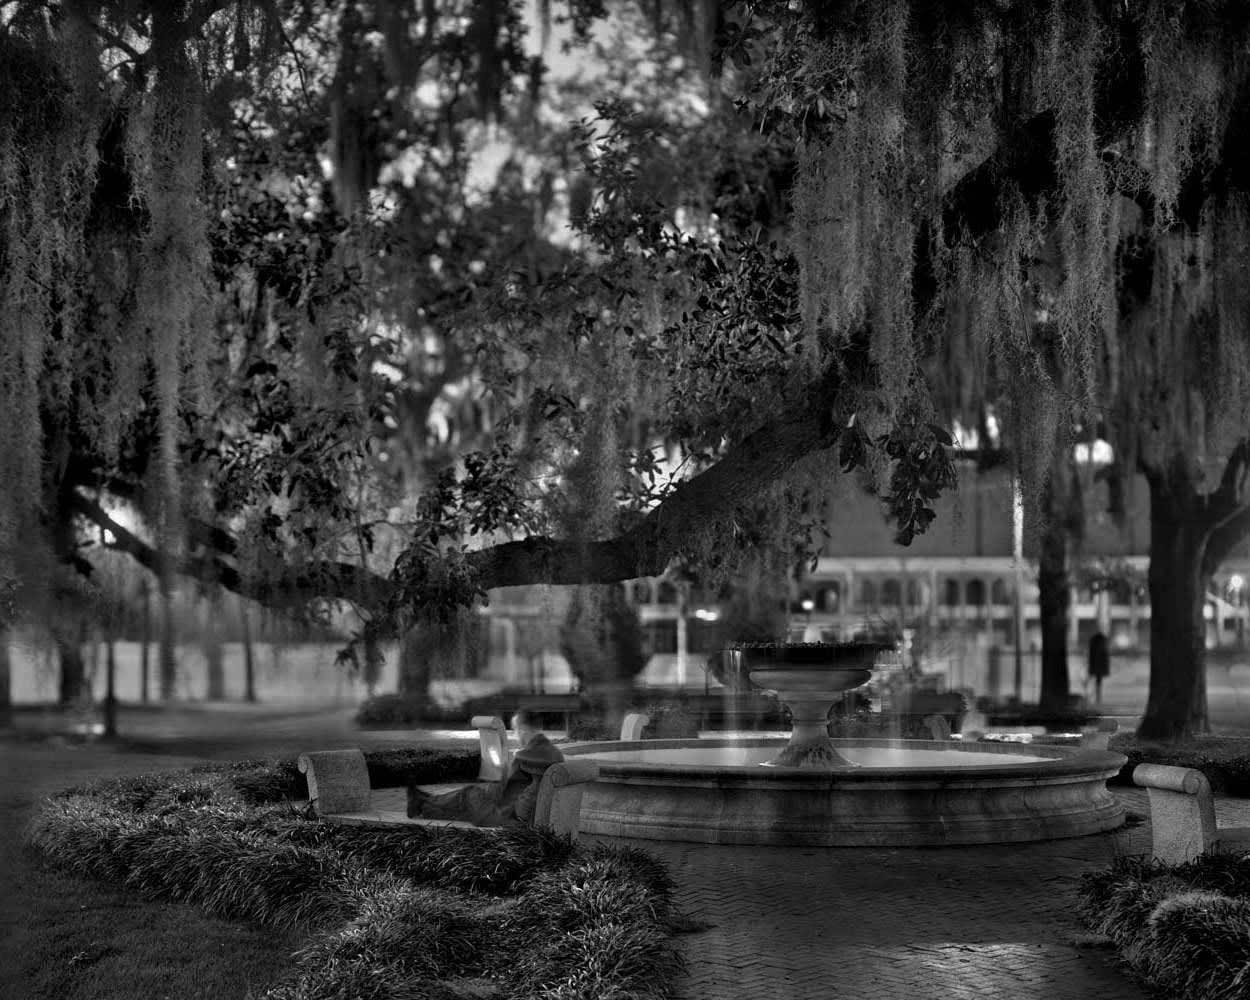 Nathan Noland, Orleans Square, Savannah, Georgia by Matthew Pillsbury